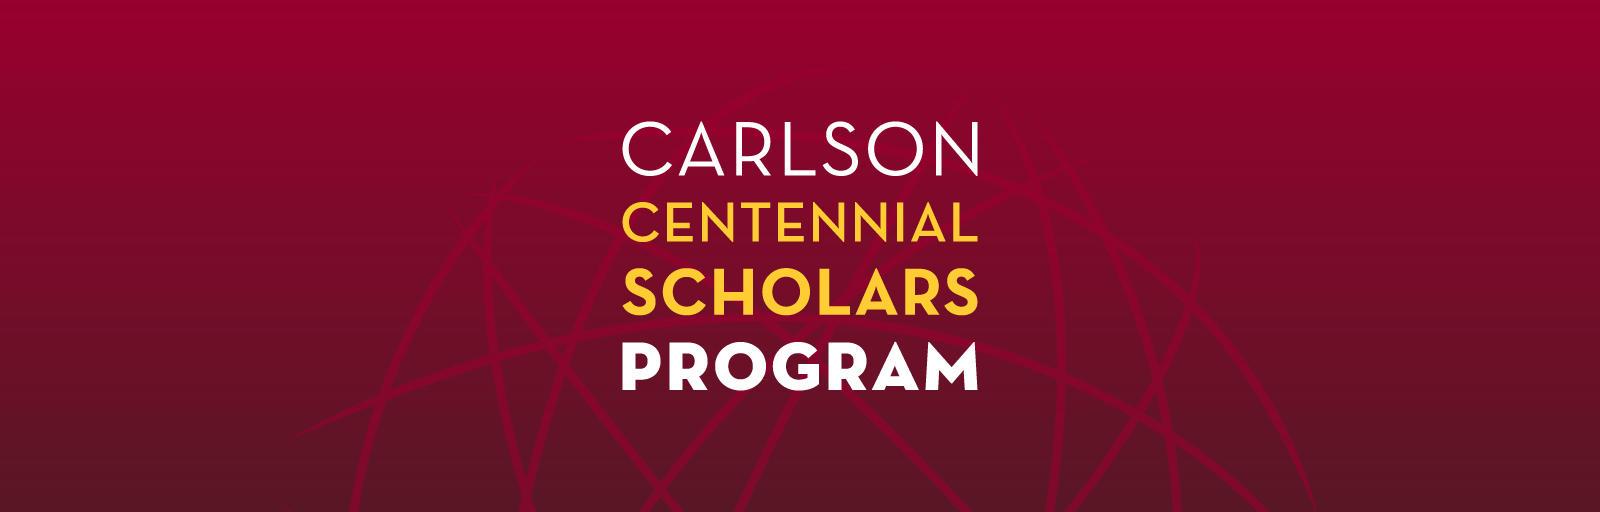 Carlson Centennial Scholars Program